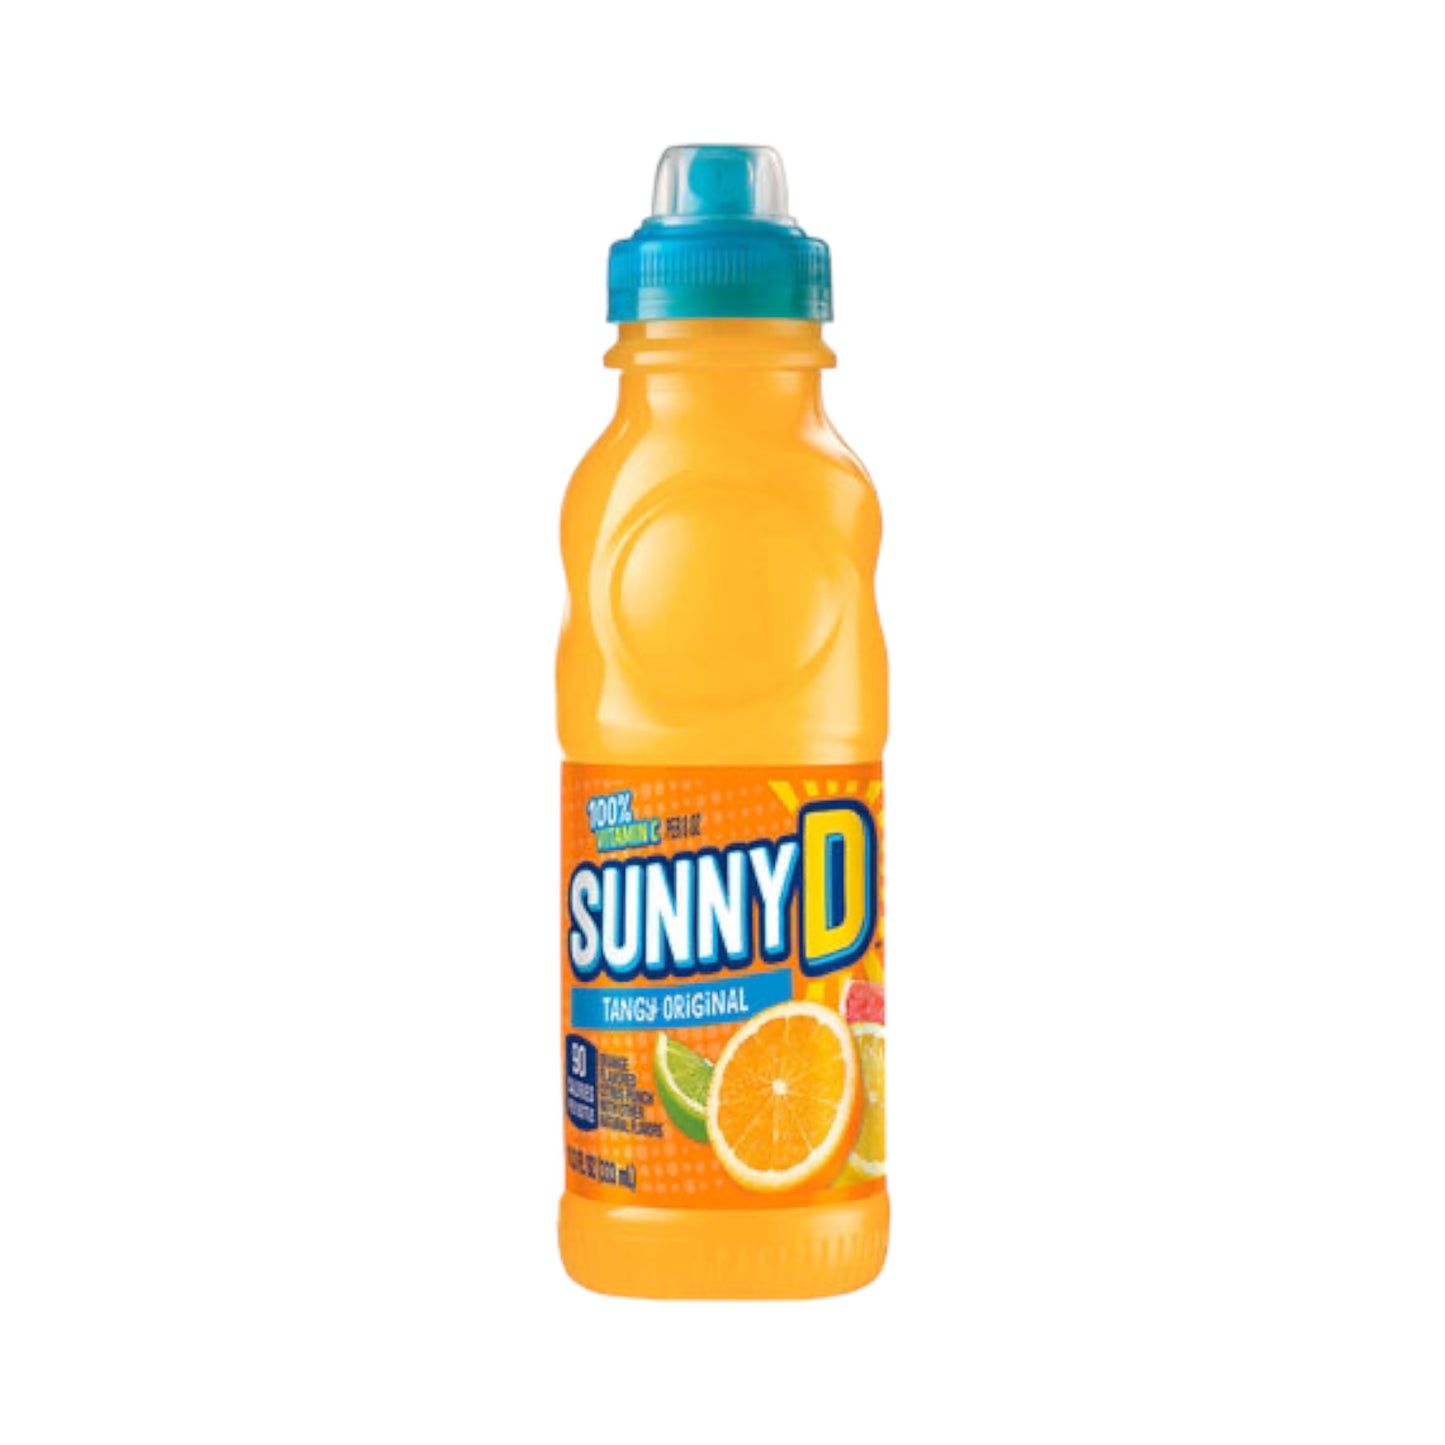 Sunny D Tangy Original Drink- 11.3oz (334ml)